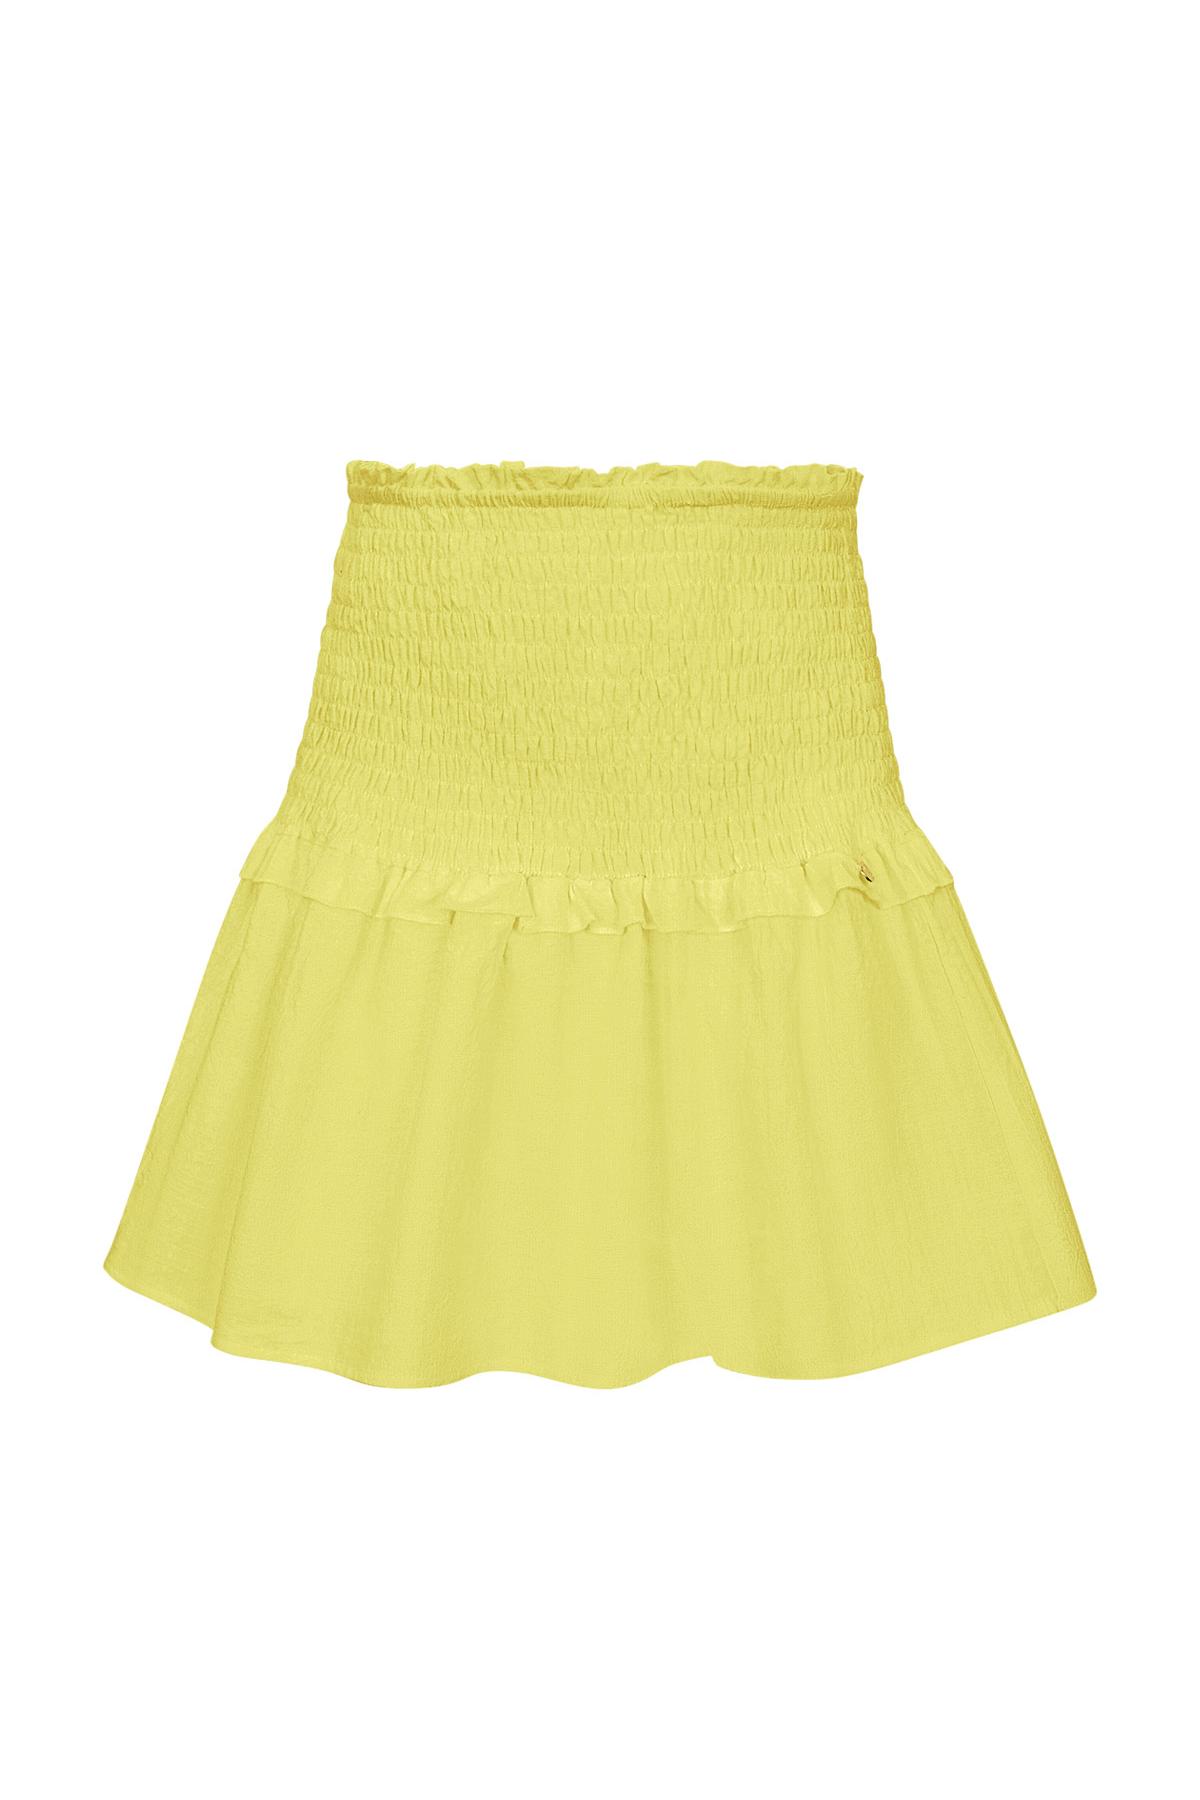 Skirt smock detail - yellow S 